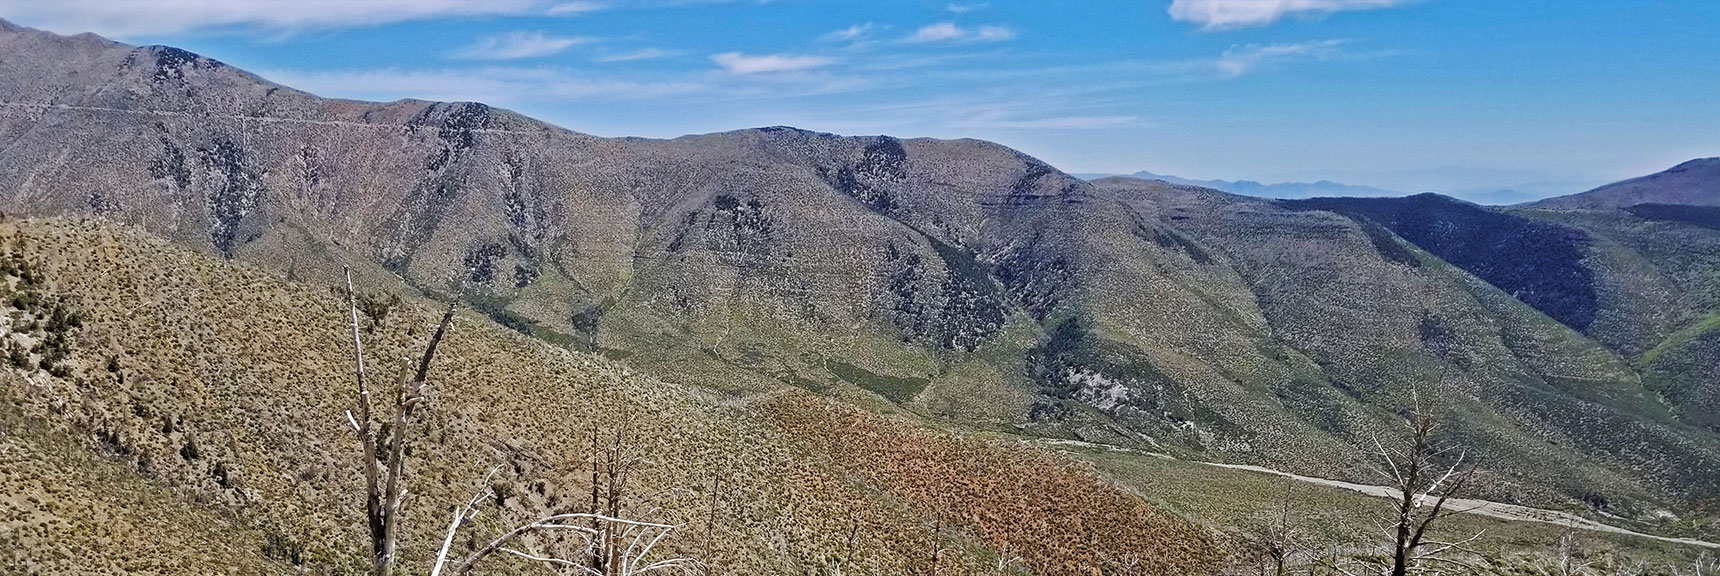 Wilson Ridge Below Connection with Harris Mountain Road. Lovell Canyon Below. | Wilson Ridge | Lovell Canyon, Nevada